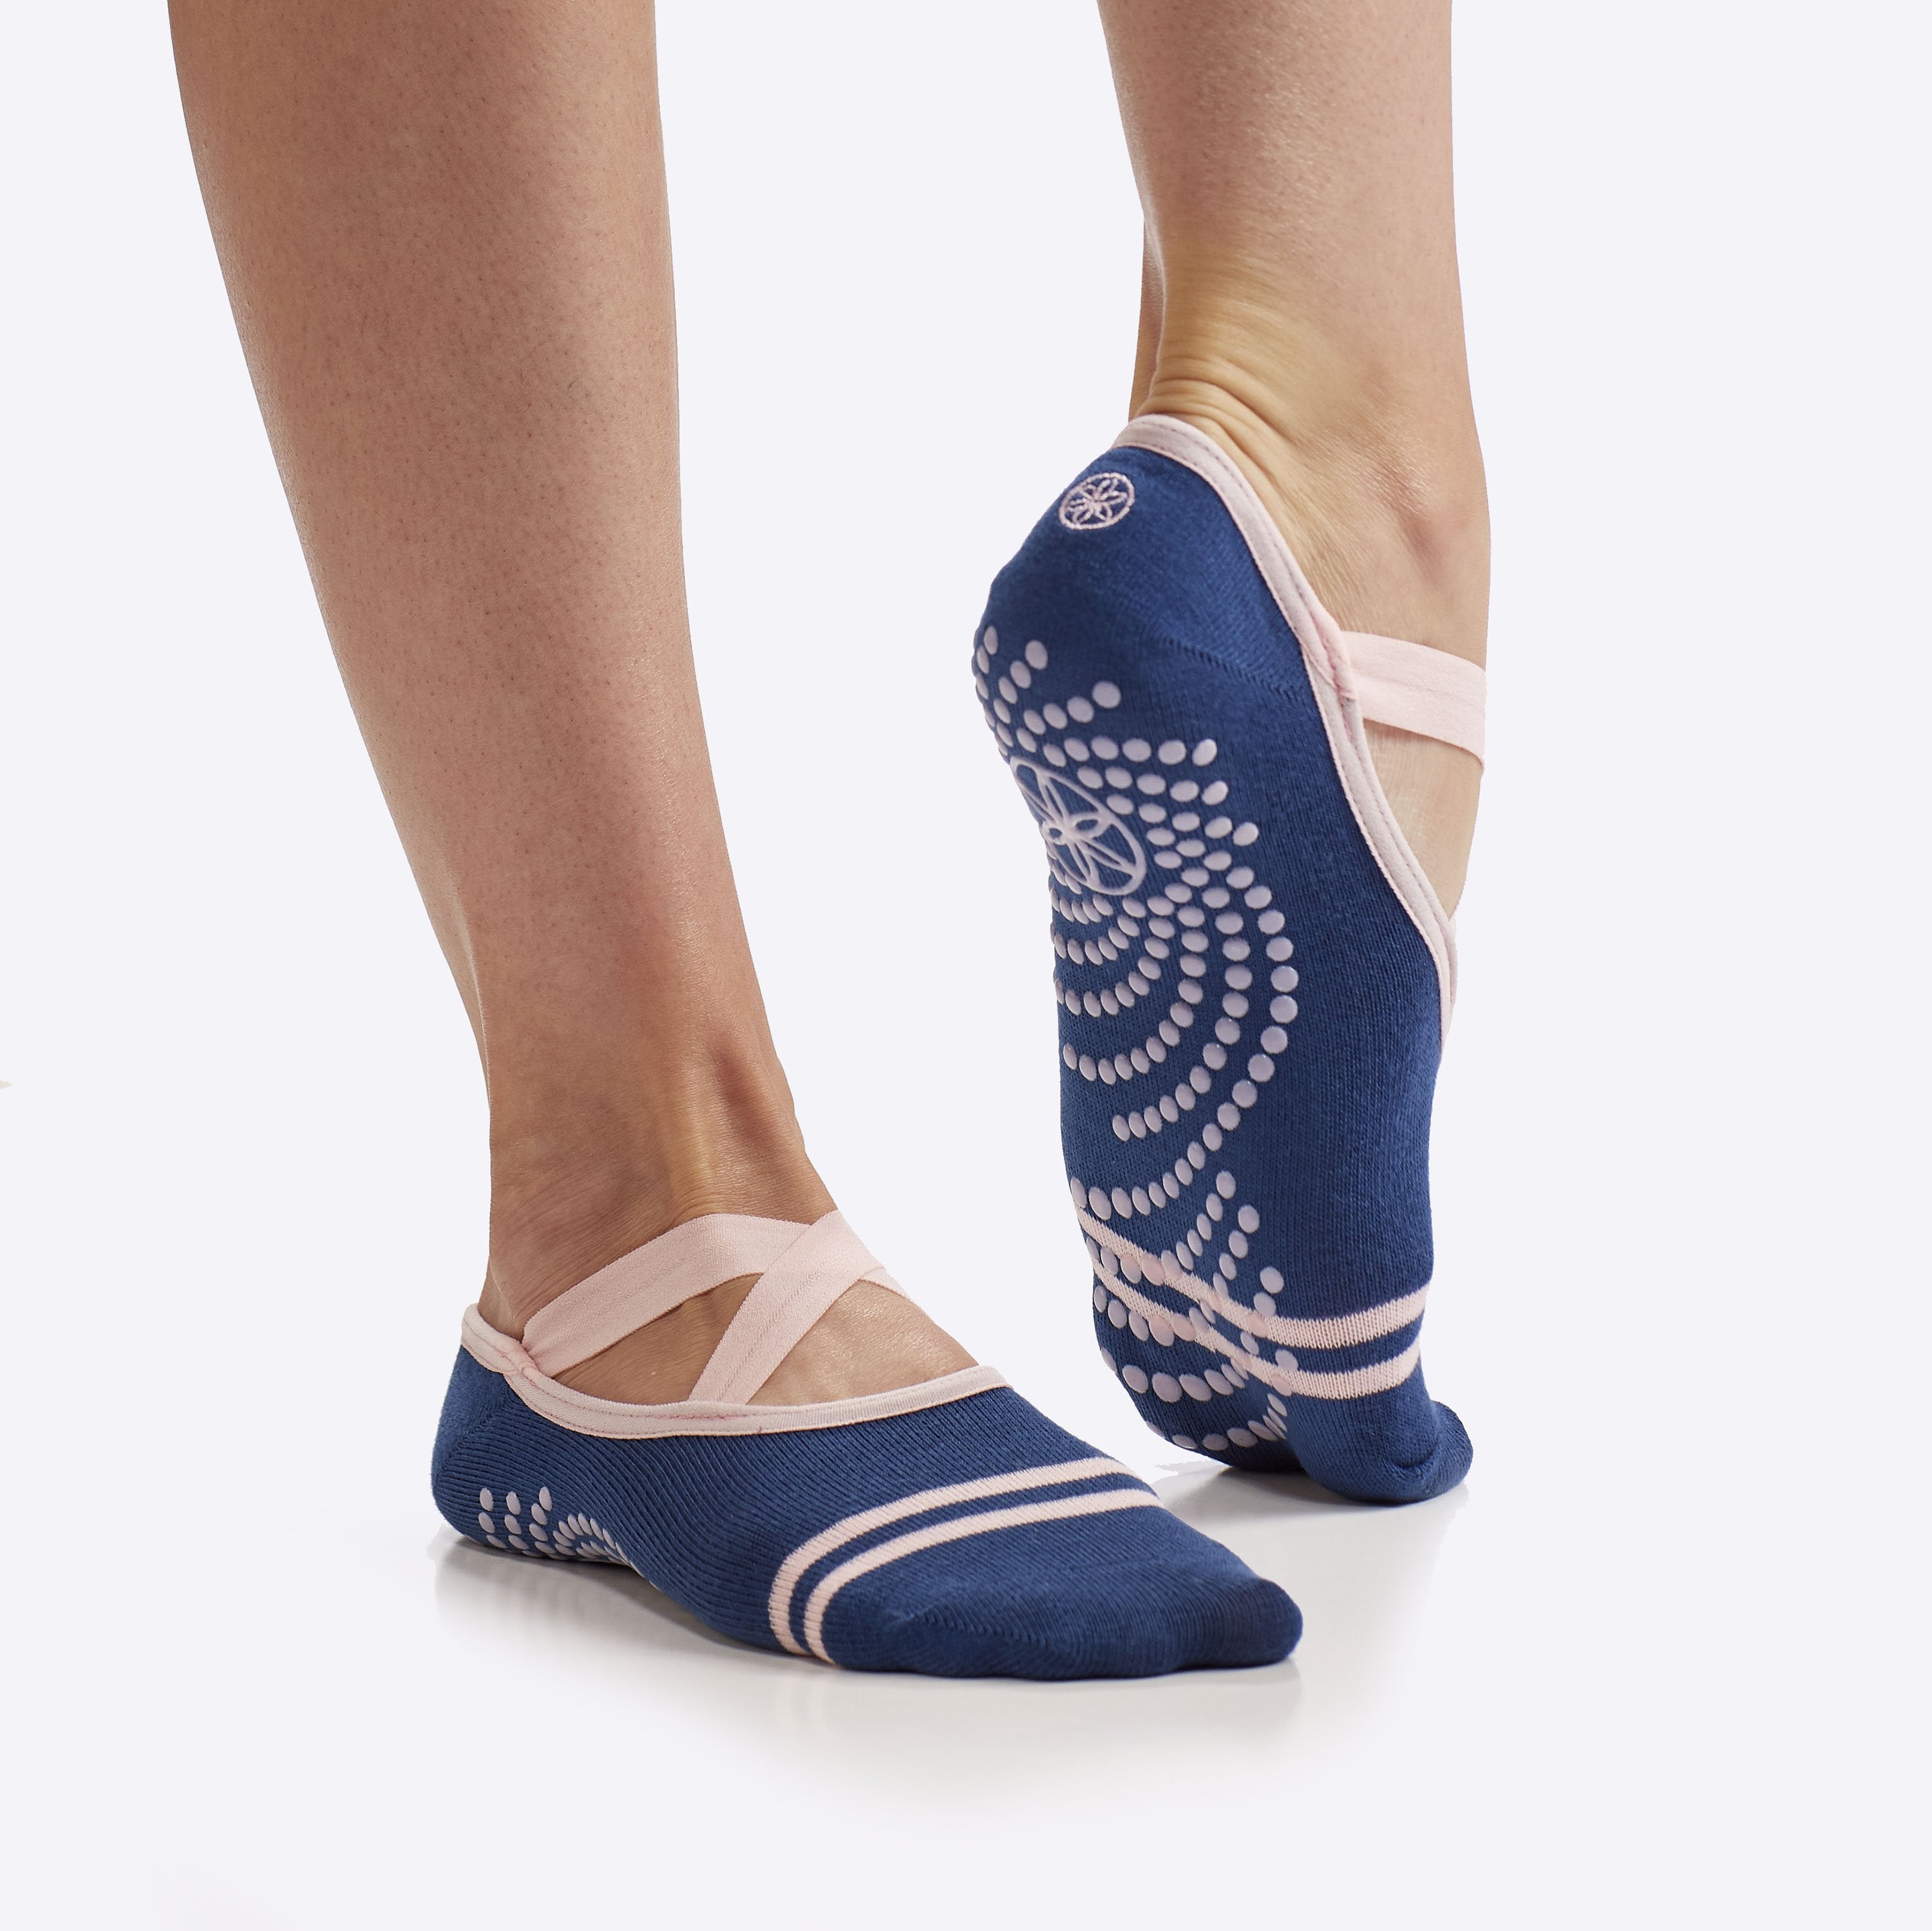 GAIAM Grippy Yoga Socks - Pink, Small/Medium - Ayurveda 101 Online Shop  International